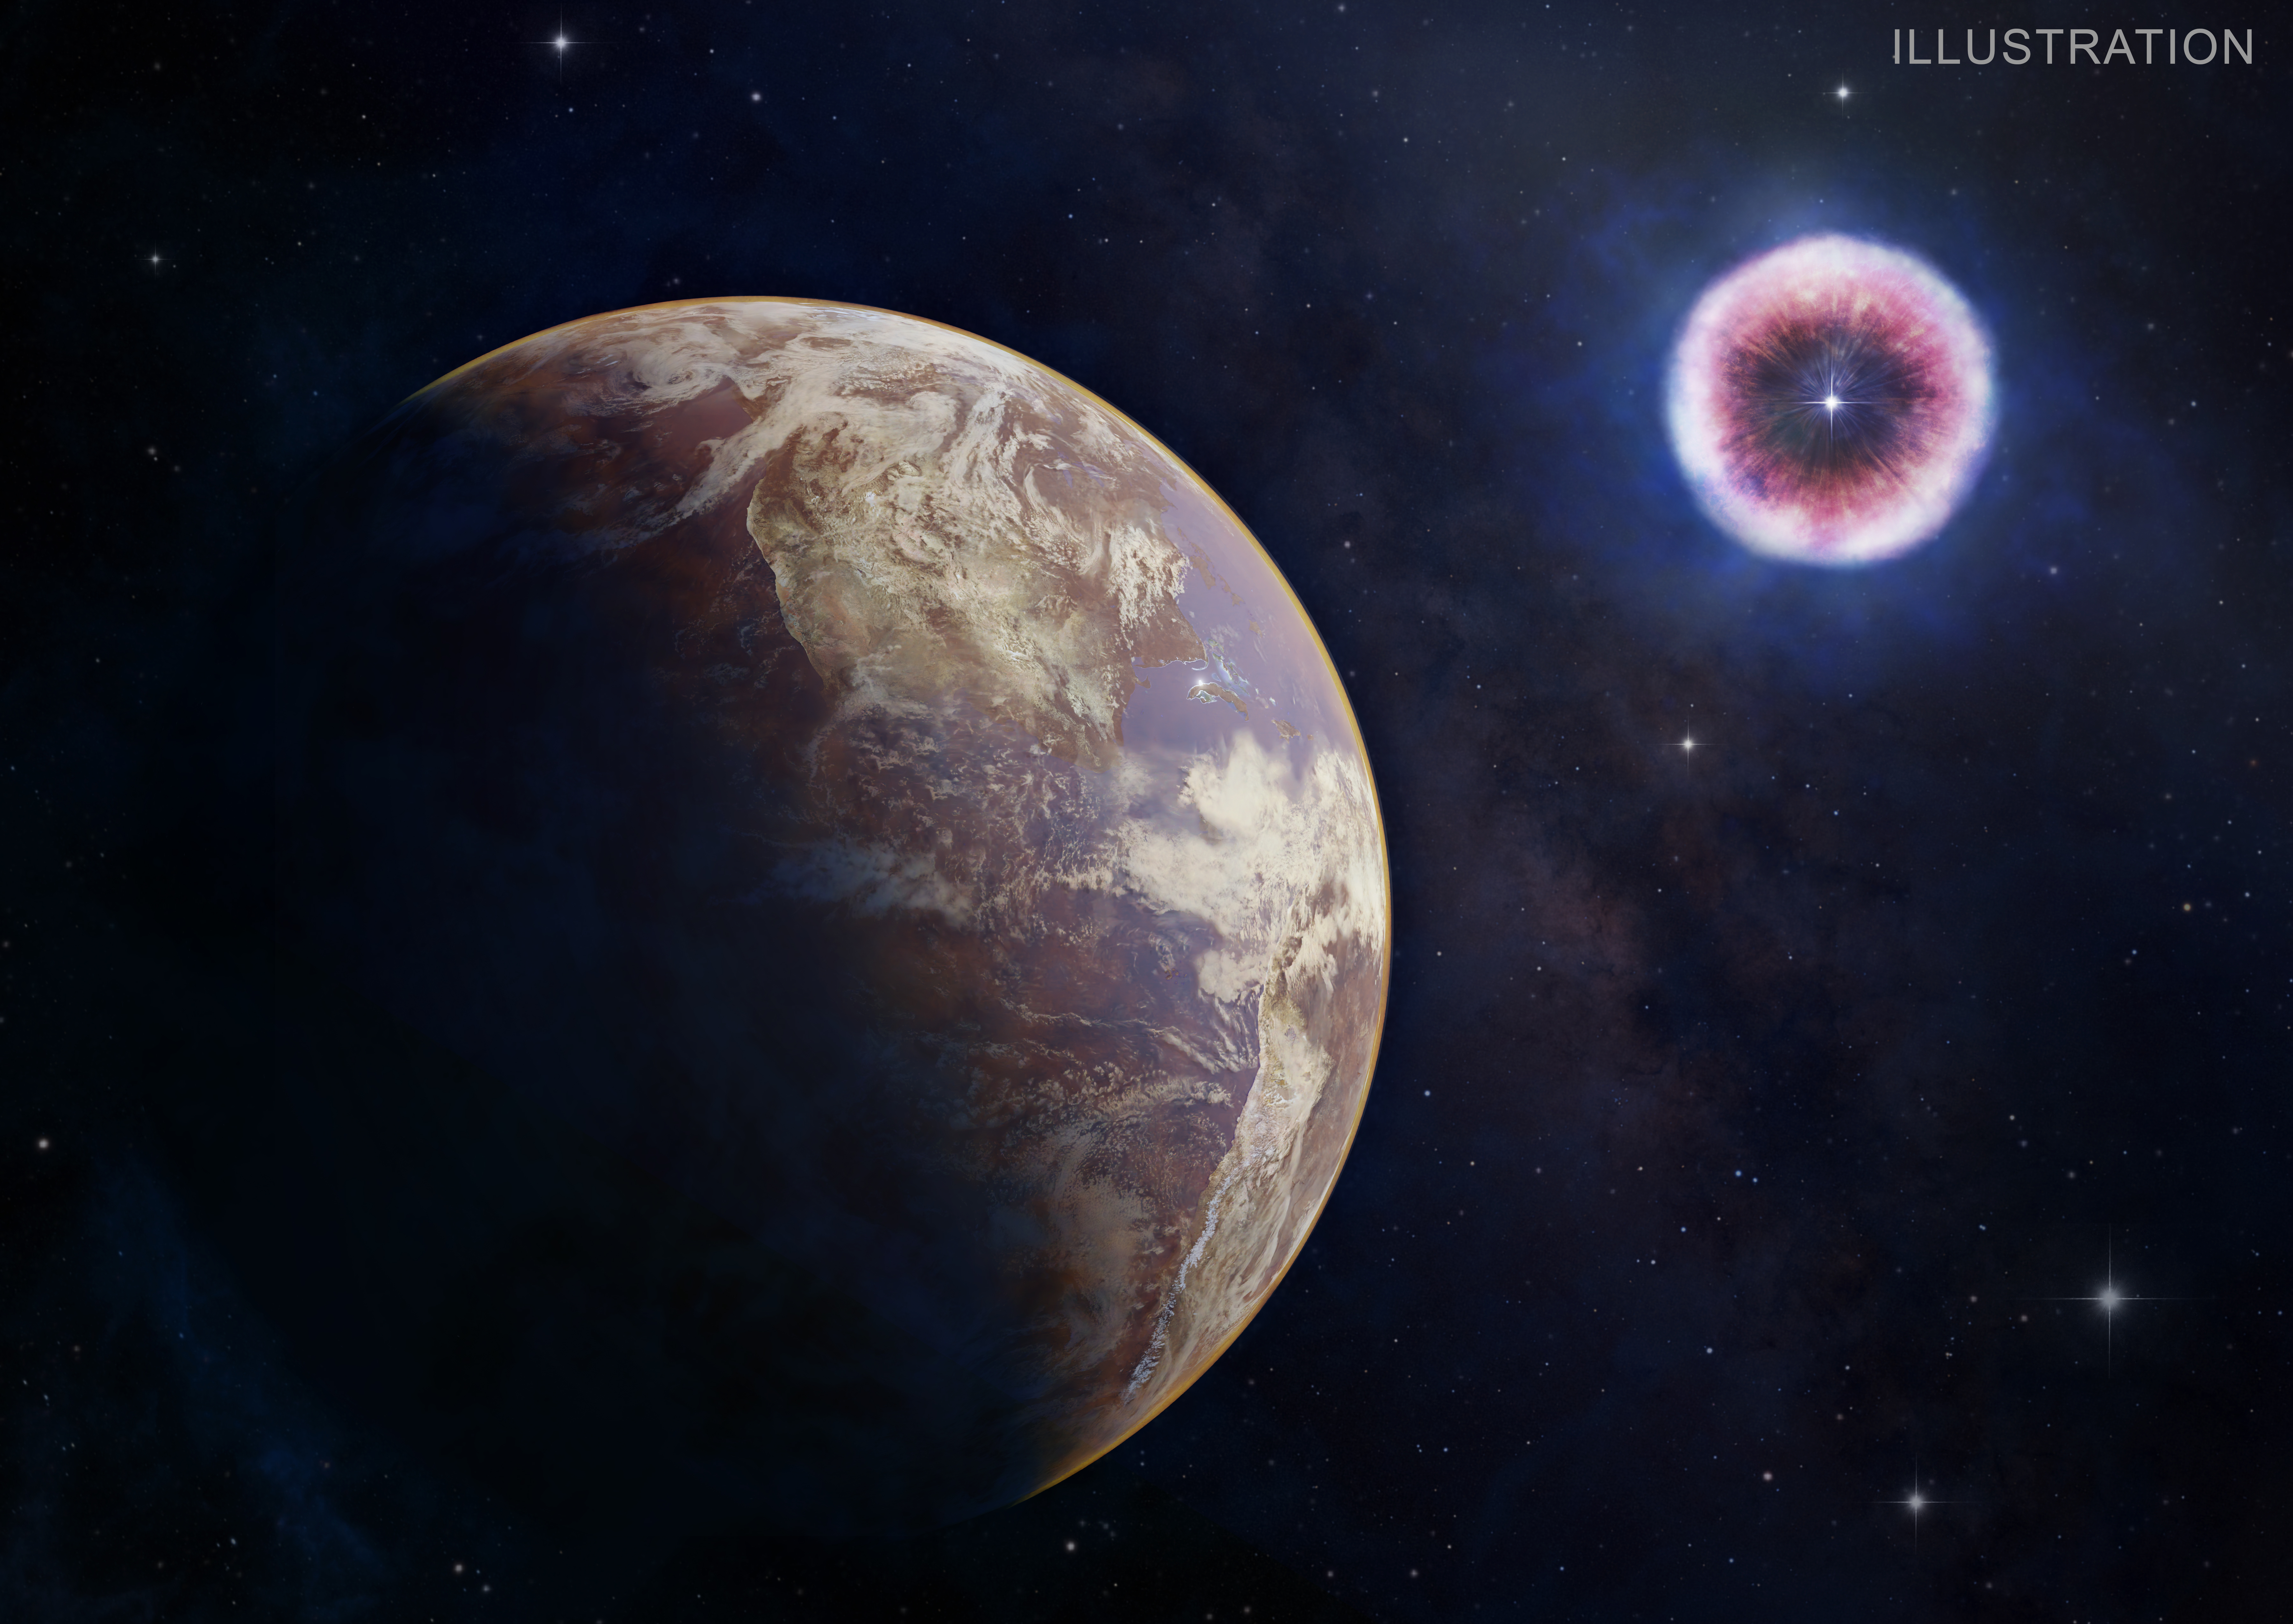 Supernova X-rays zap planets' atmospheres, 160 light-years away